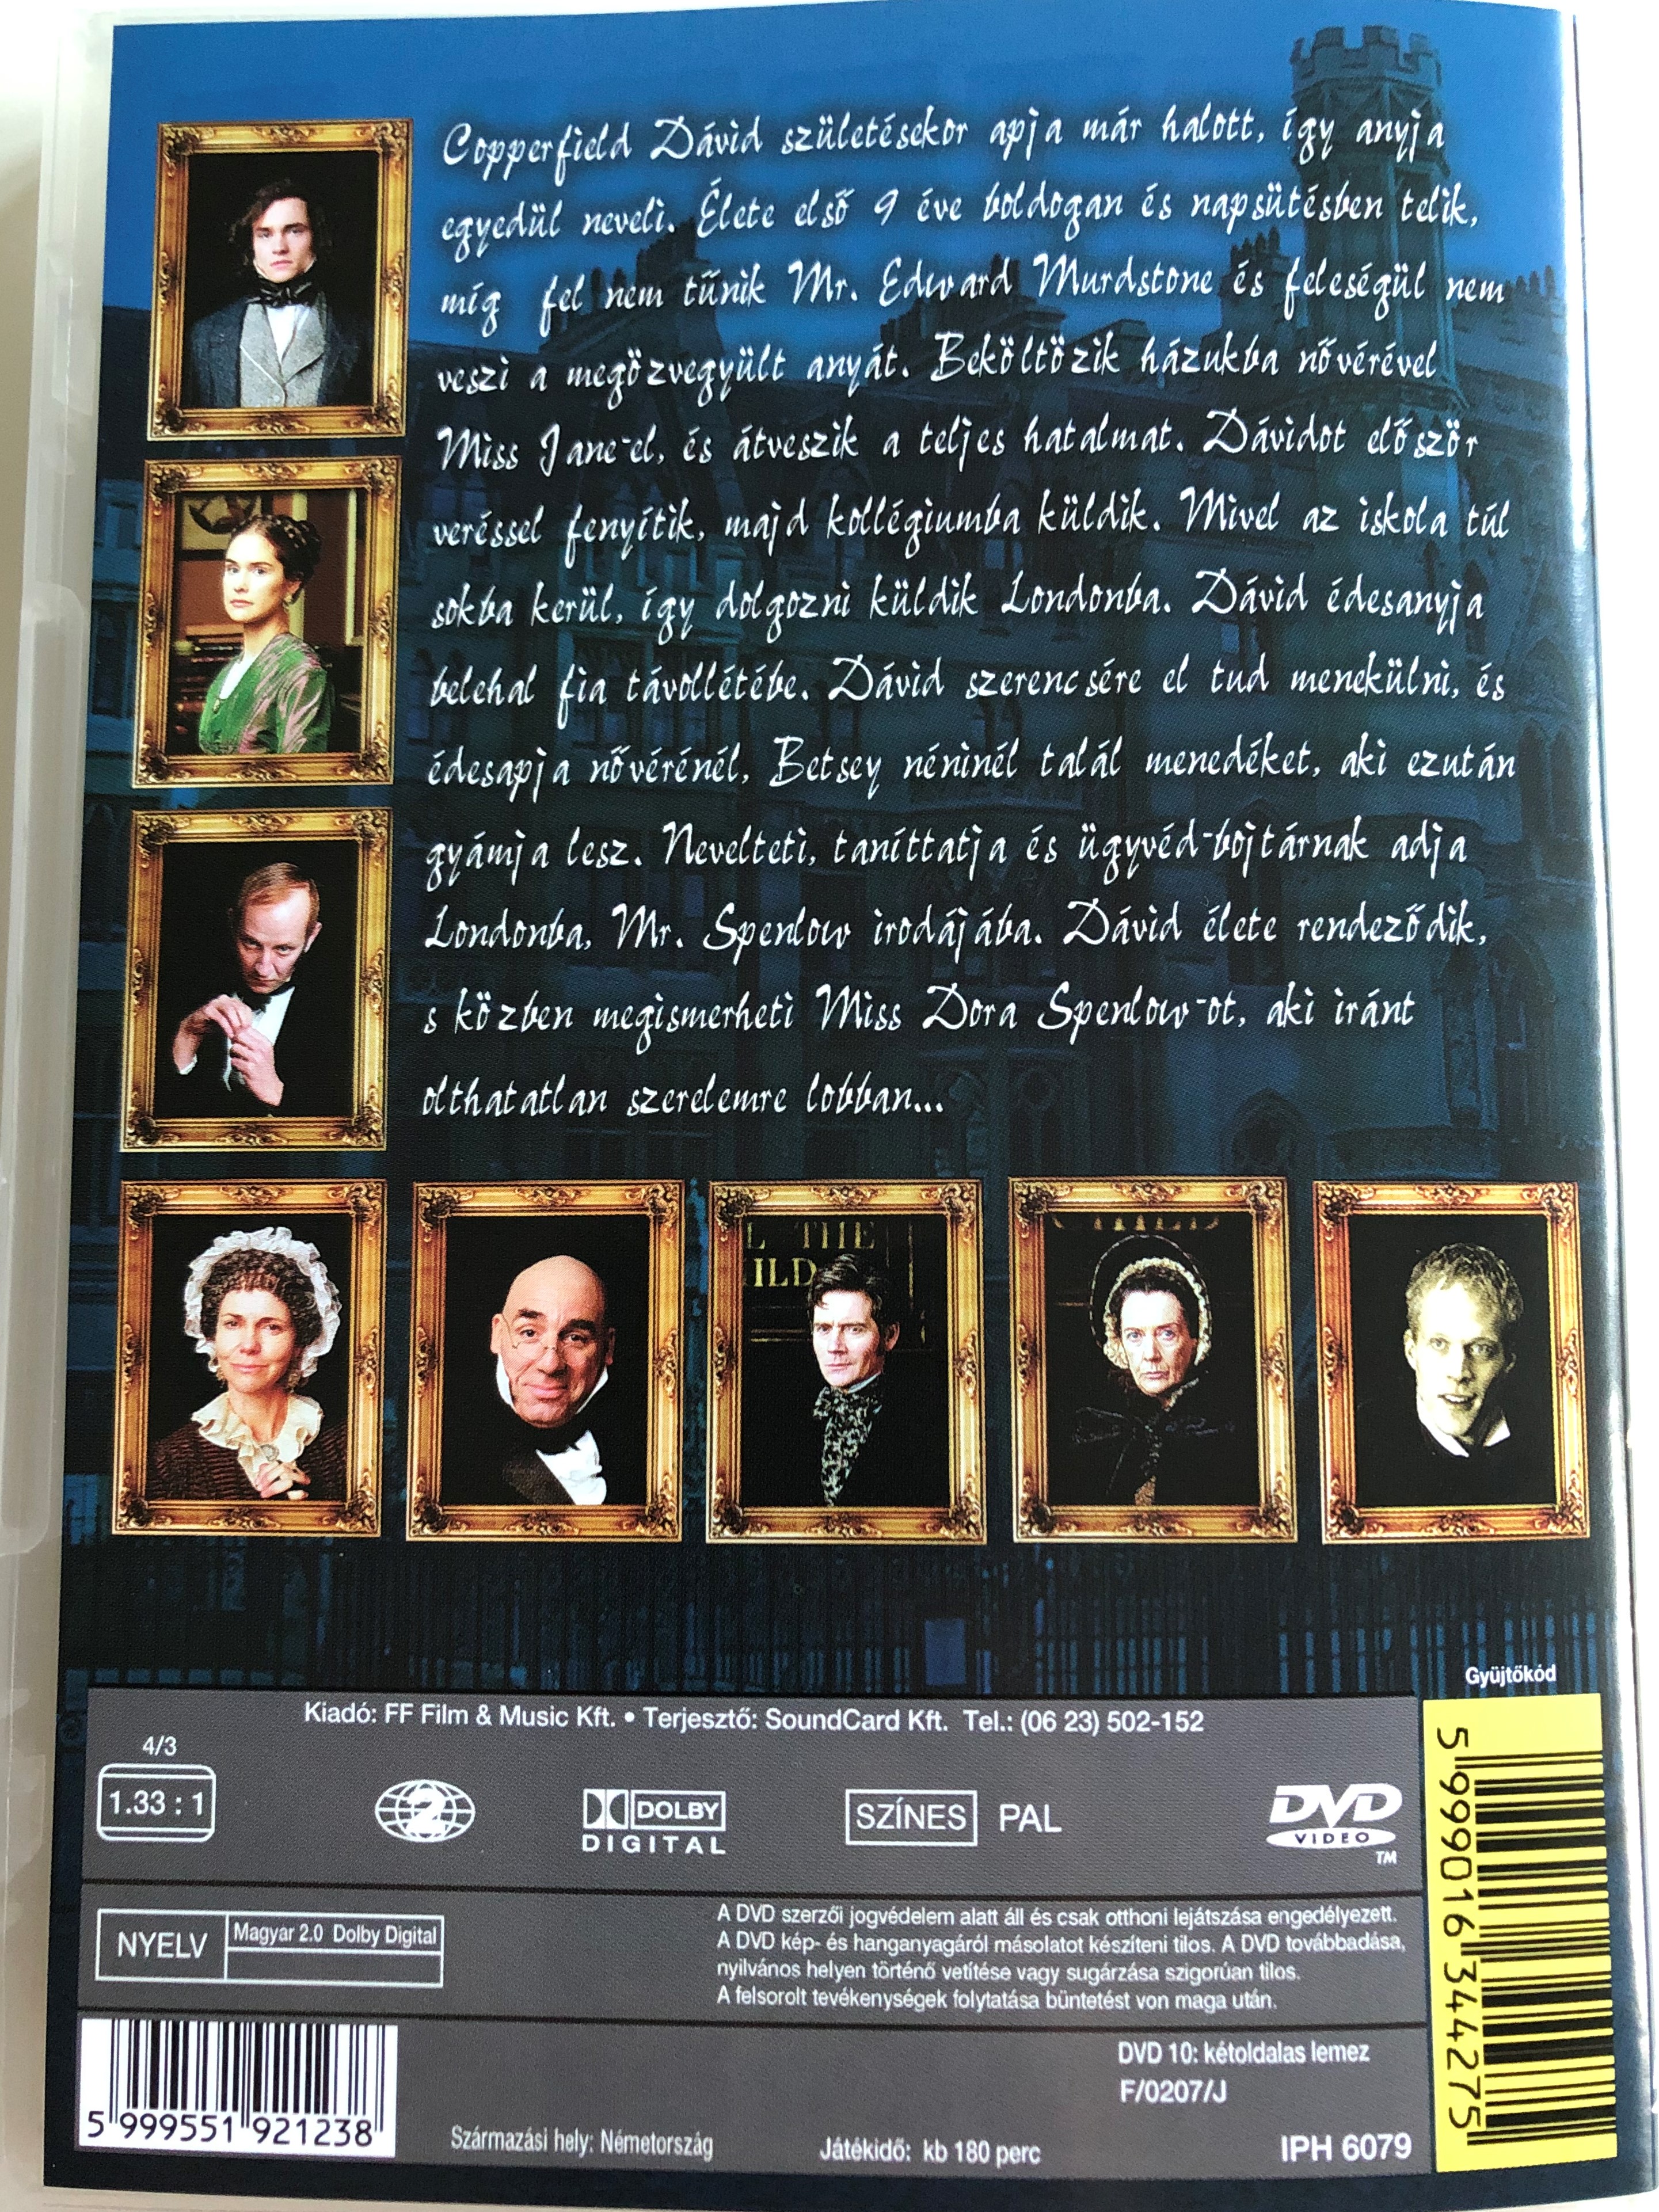 david-copperfield-dvd-2000-copperfield-david-directed-by-peter-medak-2.jpg